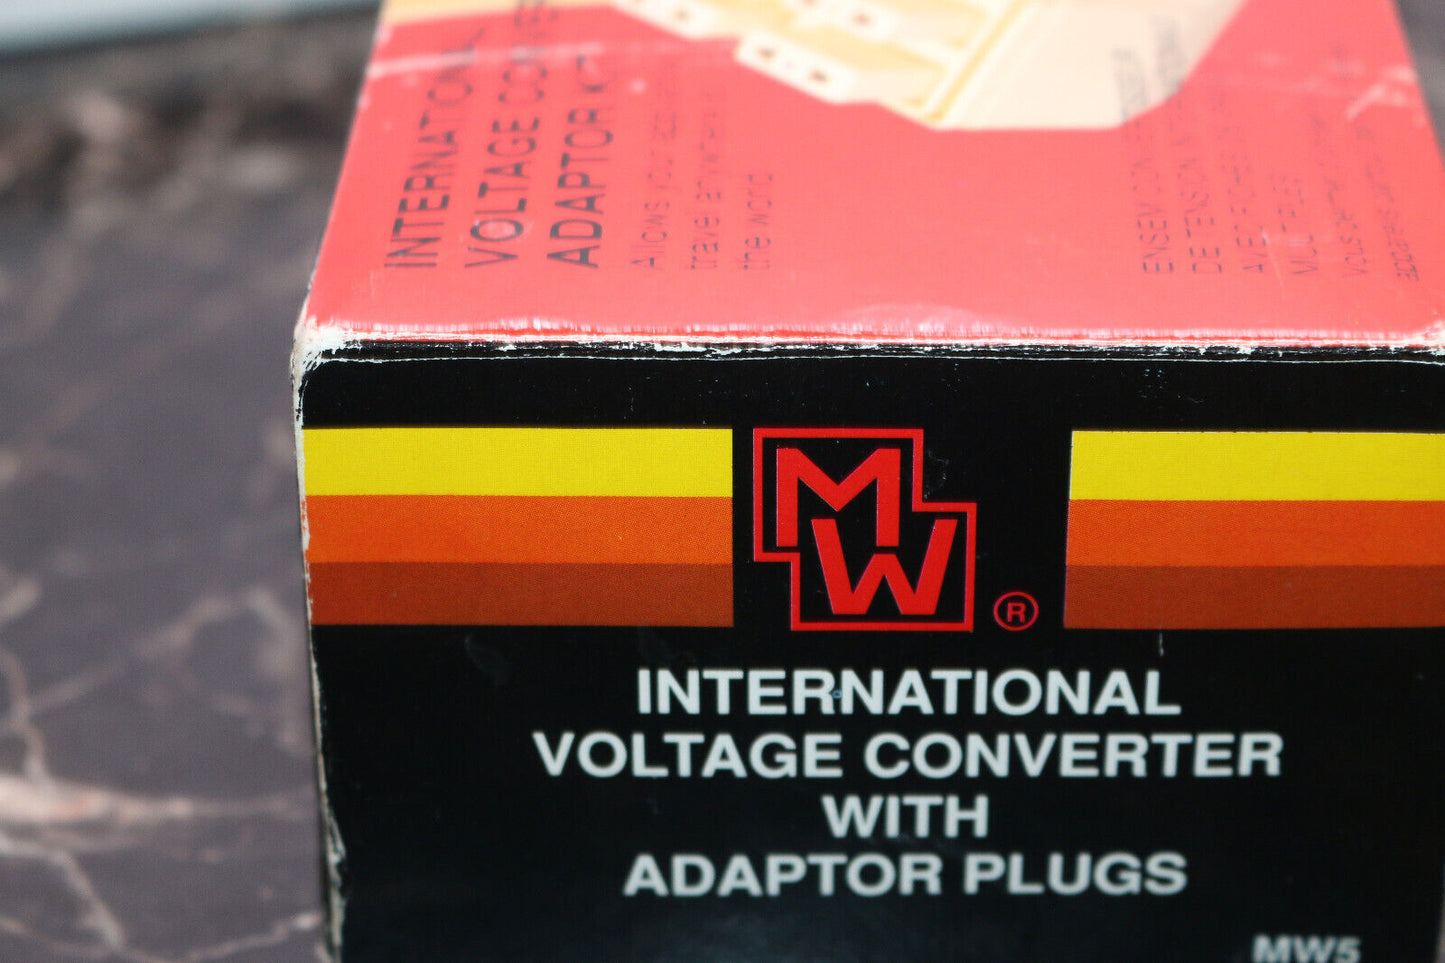 Vintage Travel Care Model International Travel Converter Adaptor Kit Mw